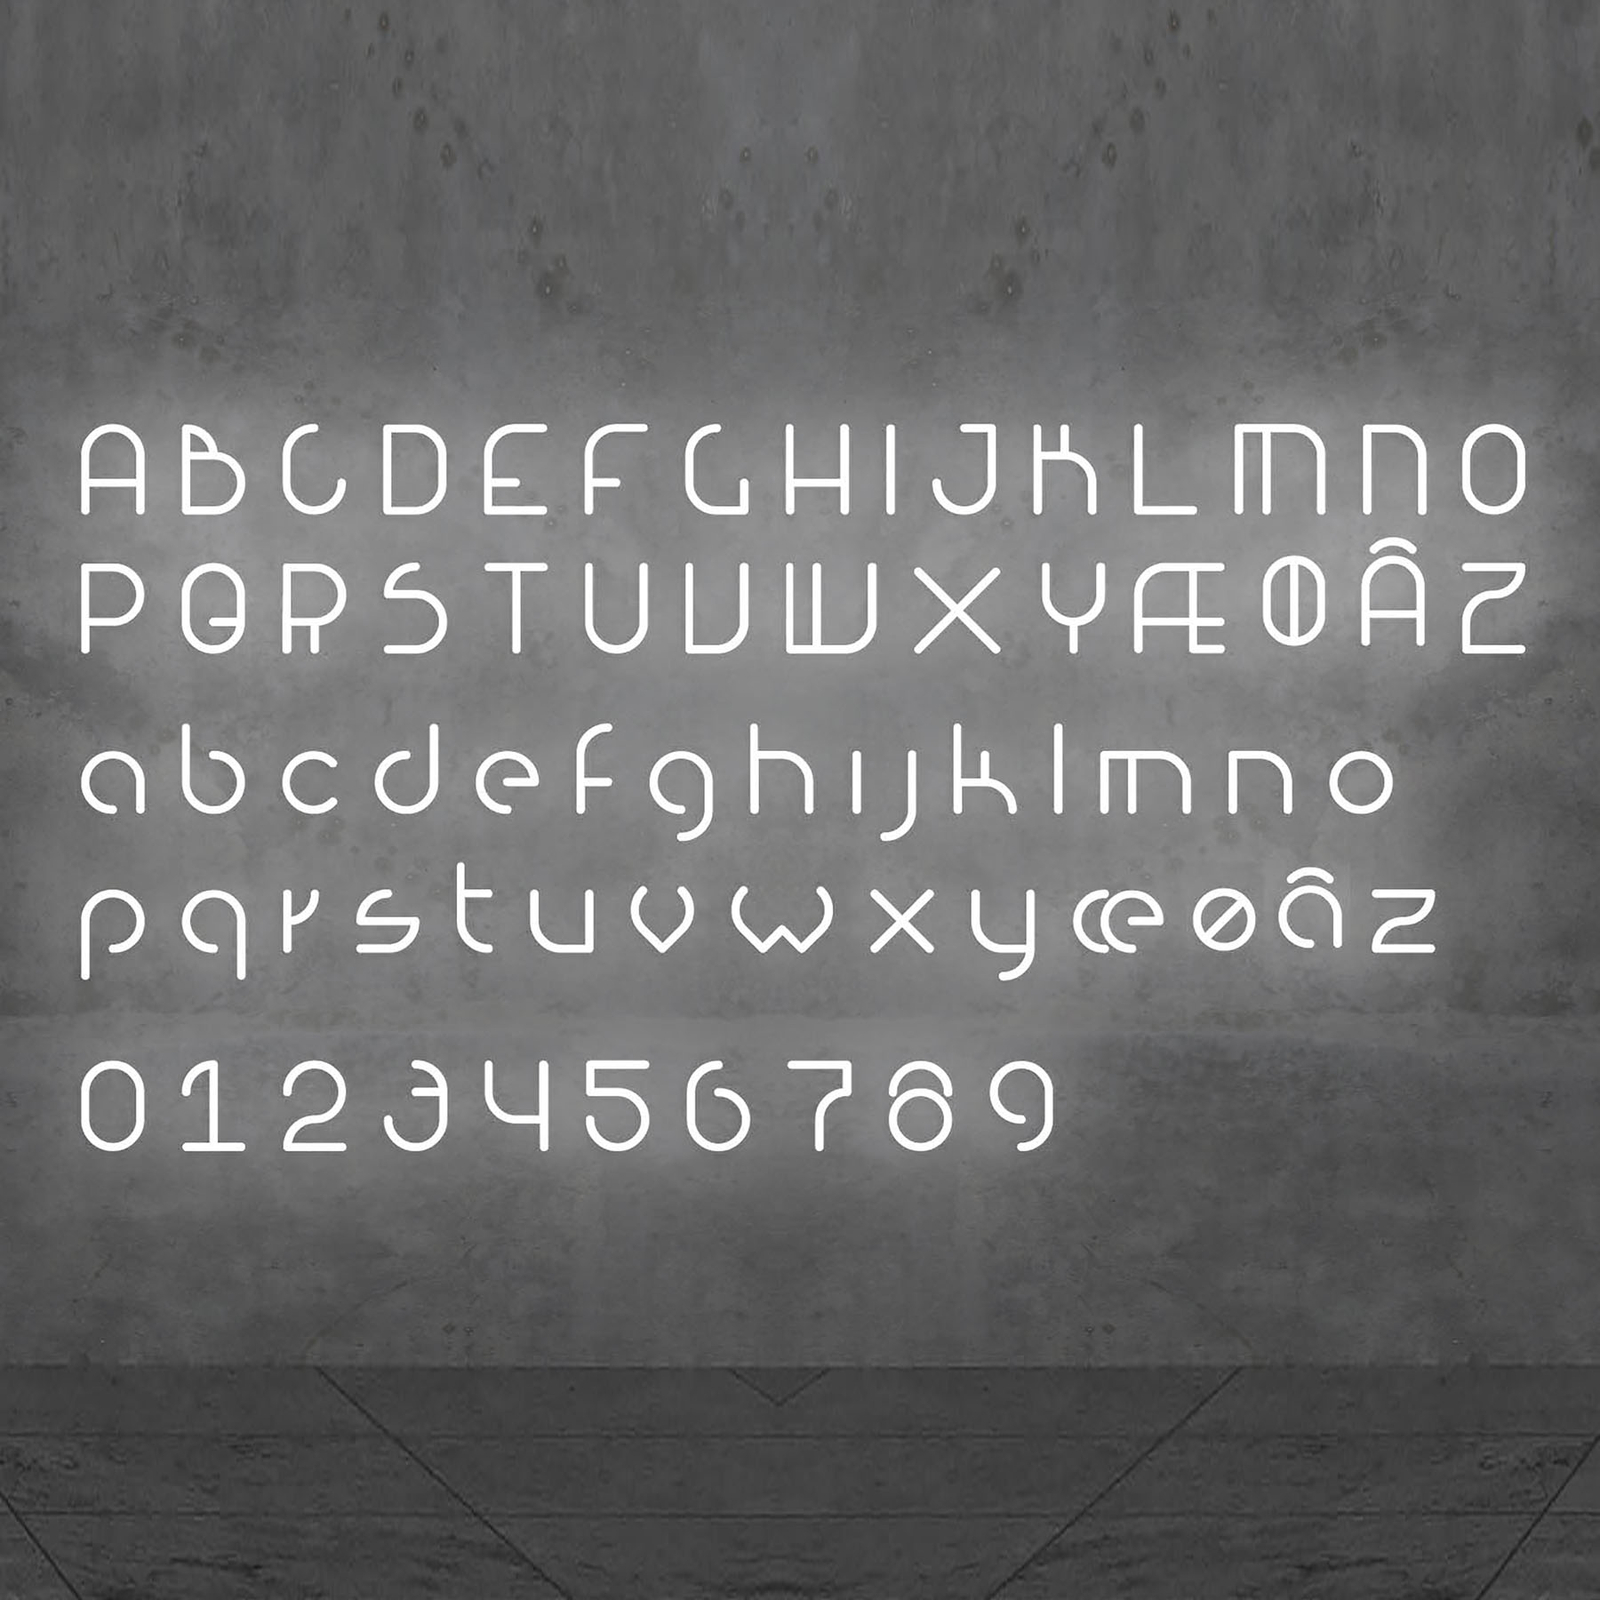 Artemide Alphabet of Light væg, lille bogstav k